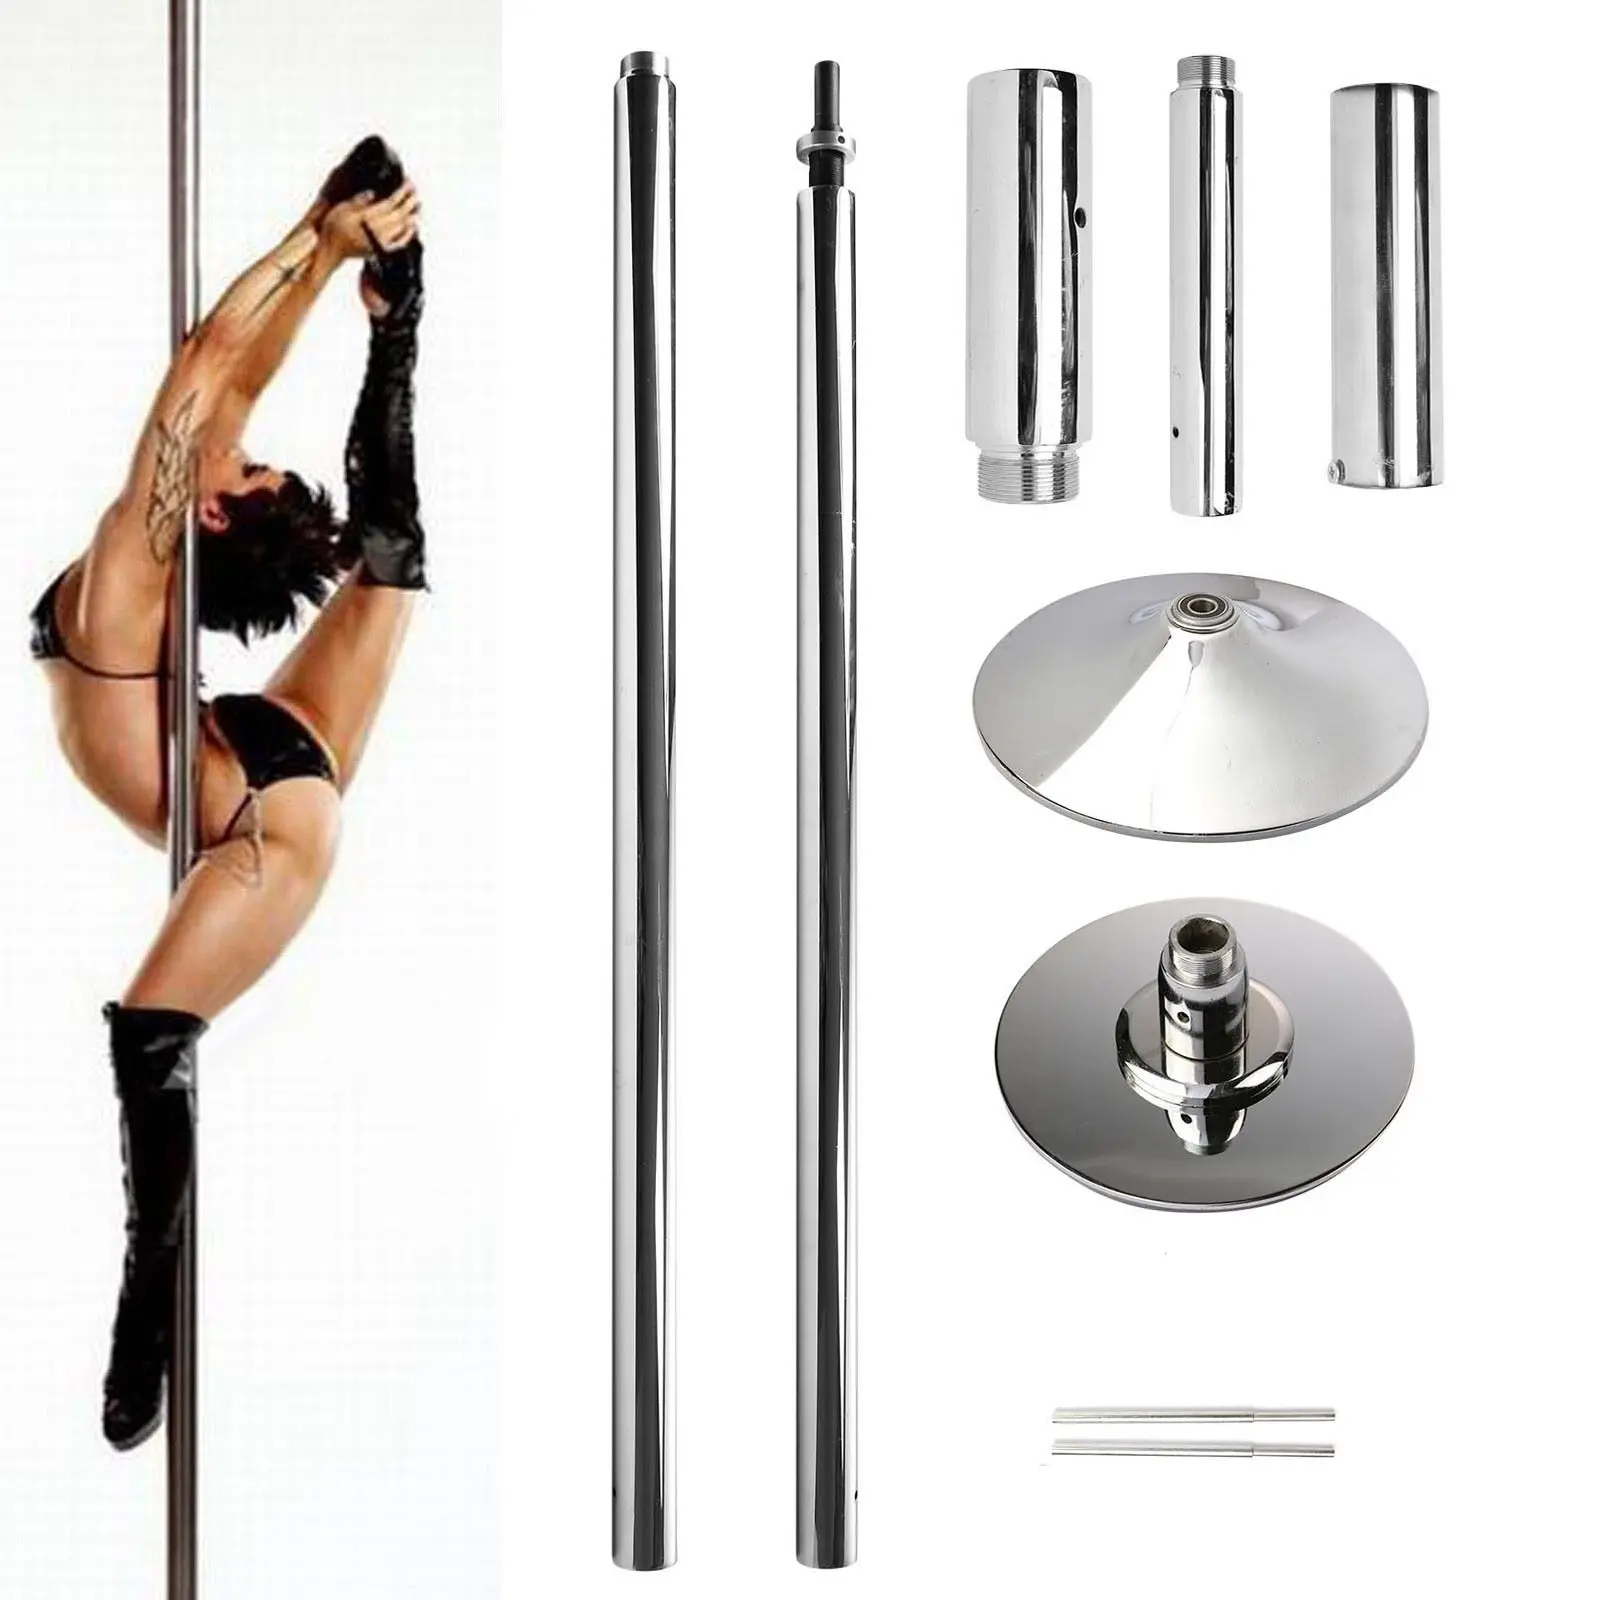 45mm Chrome Dance Pole Stripper Pole Dance attrezzature per esercizi